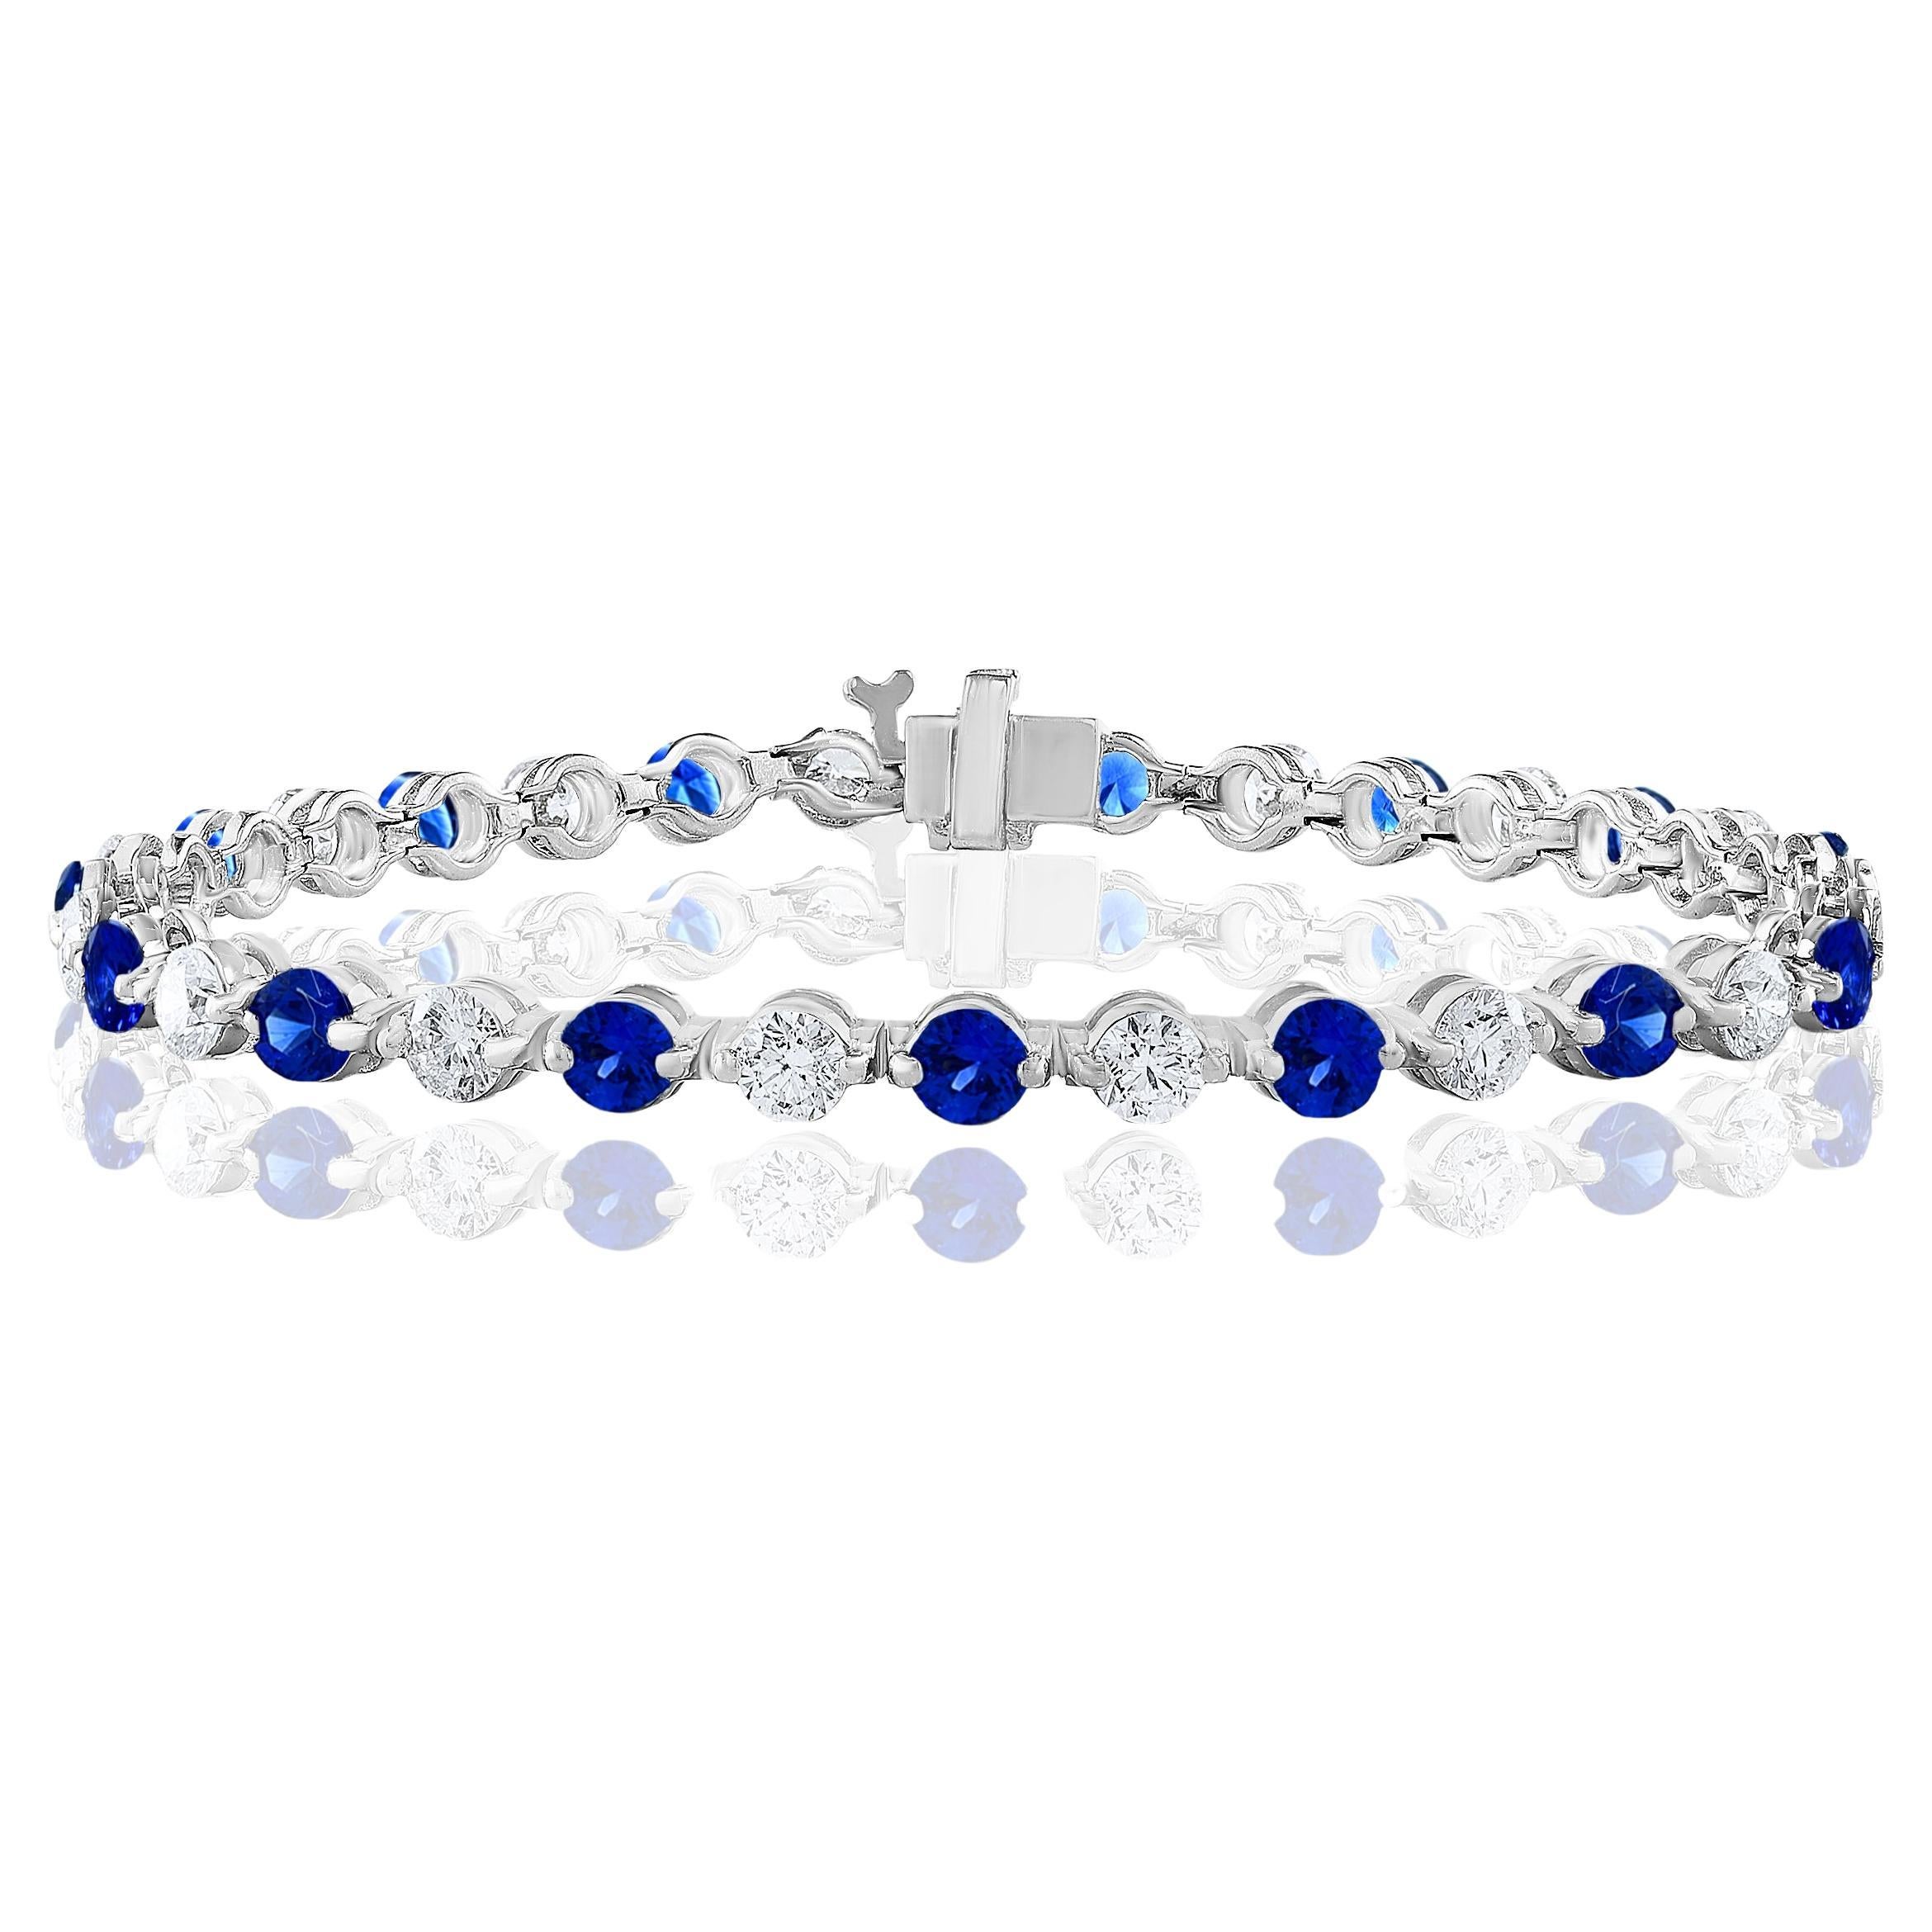 3.18 Carat Brilliant cut Blue Sapphire and Diamond Bracelet in 14k White Gold